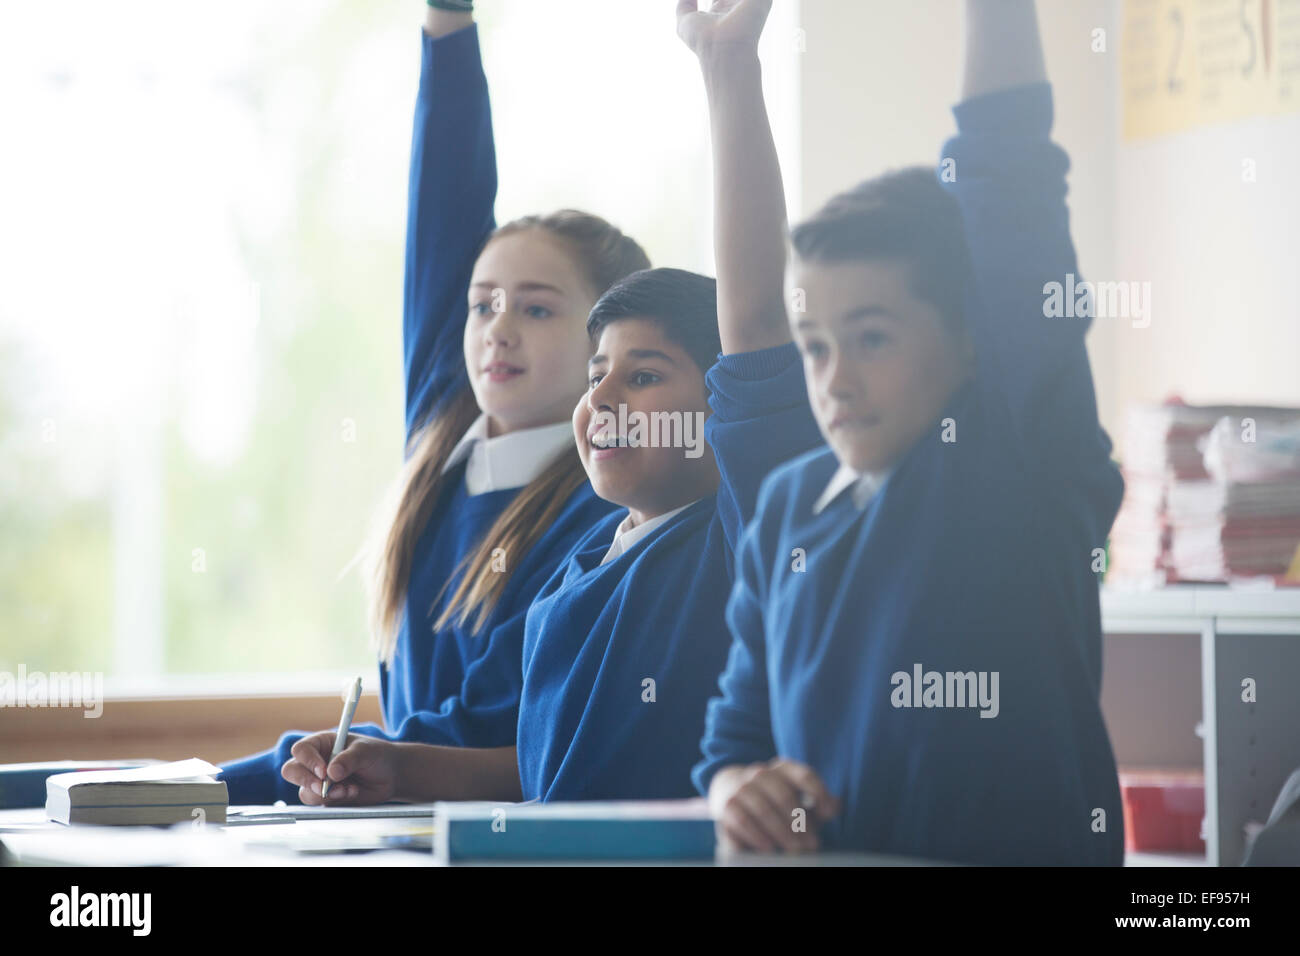 Primary school children in classroom raising arms Stock Photo